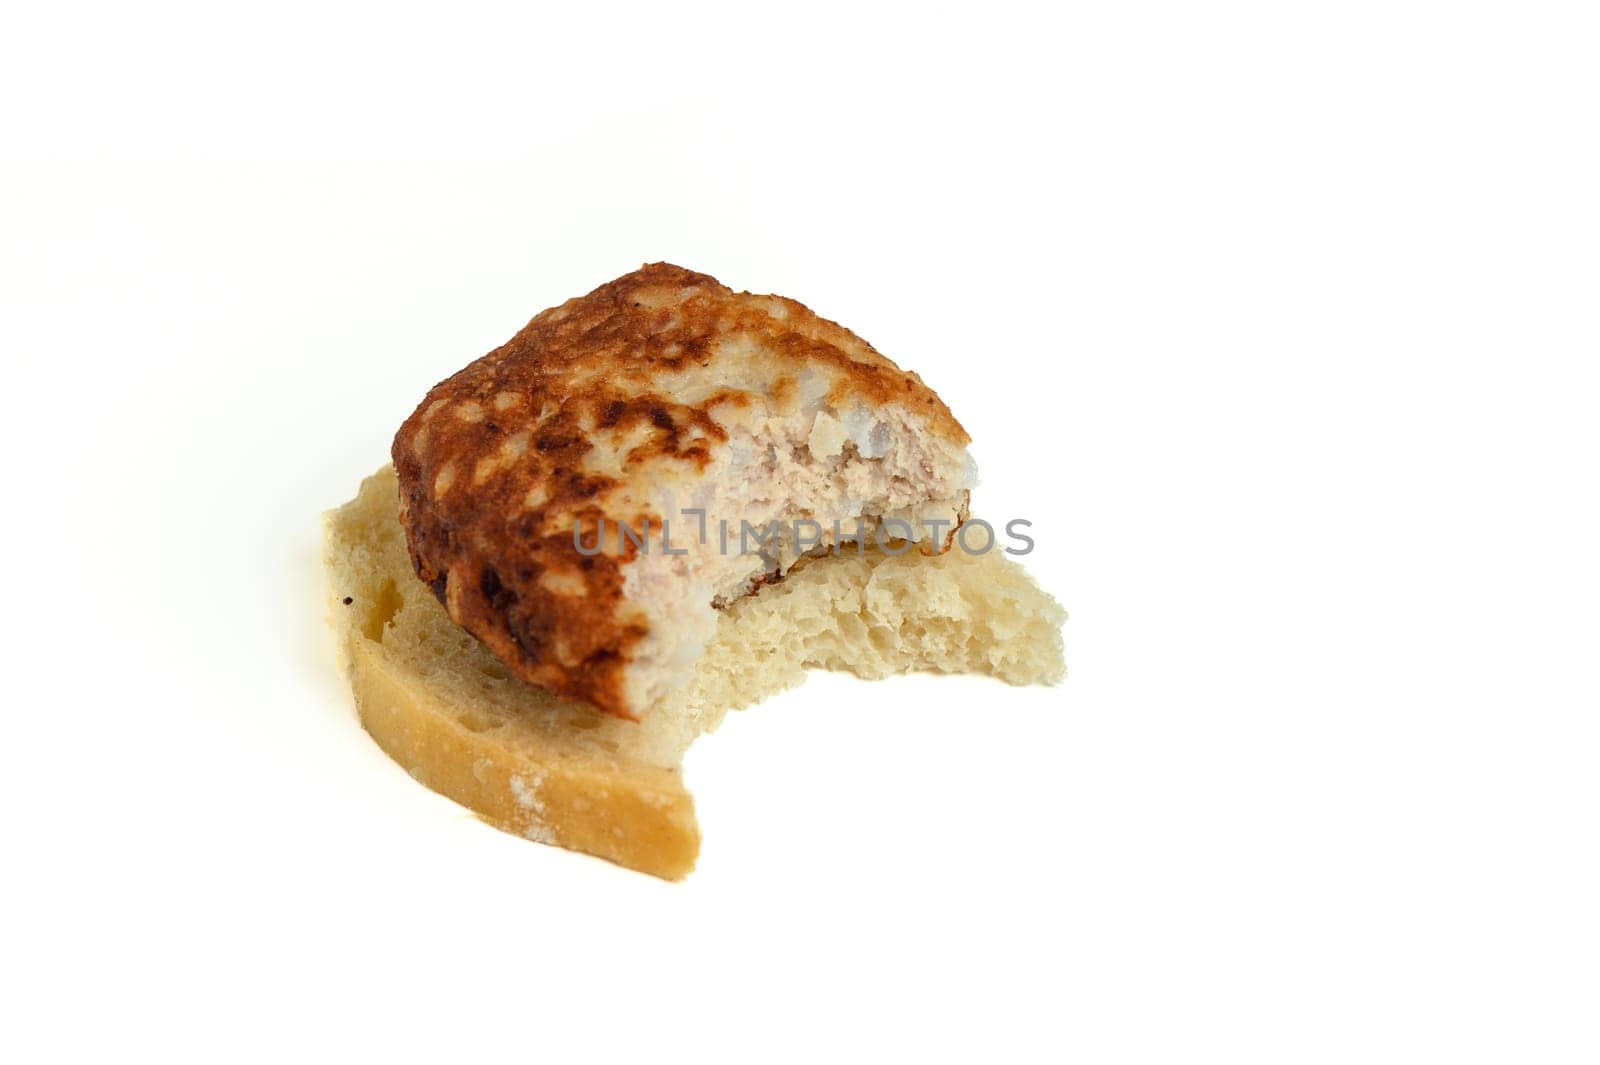 cutlet on a piece of bread, bitten off 2 by Mixa74